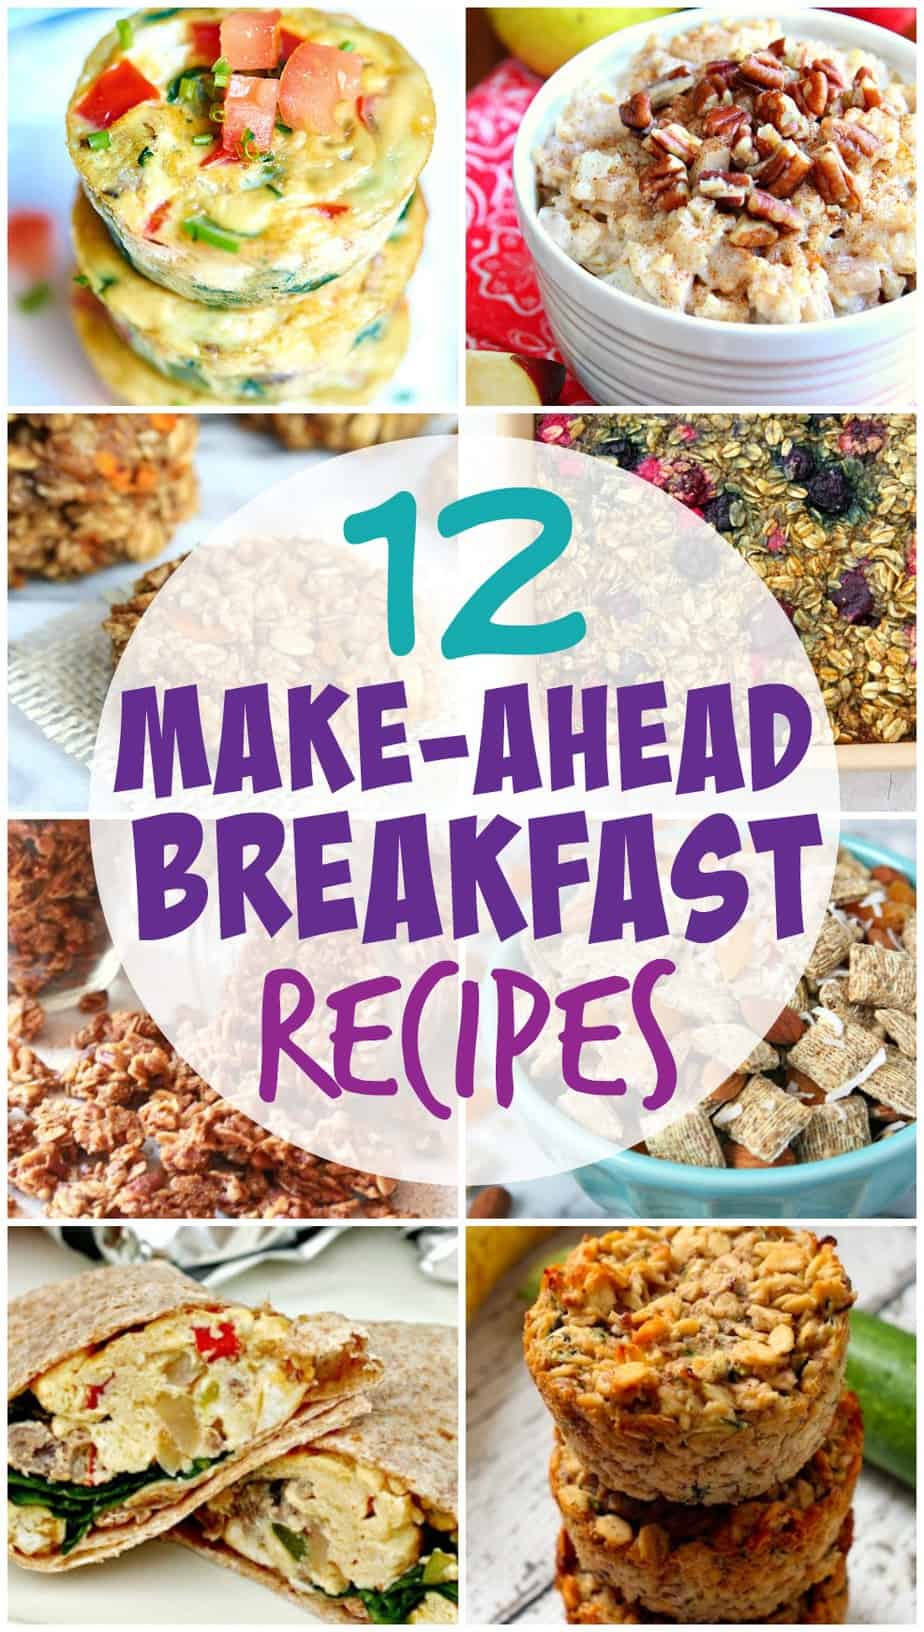 Make-Ahead Breakfast Recipes